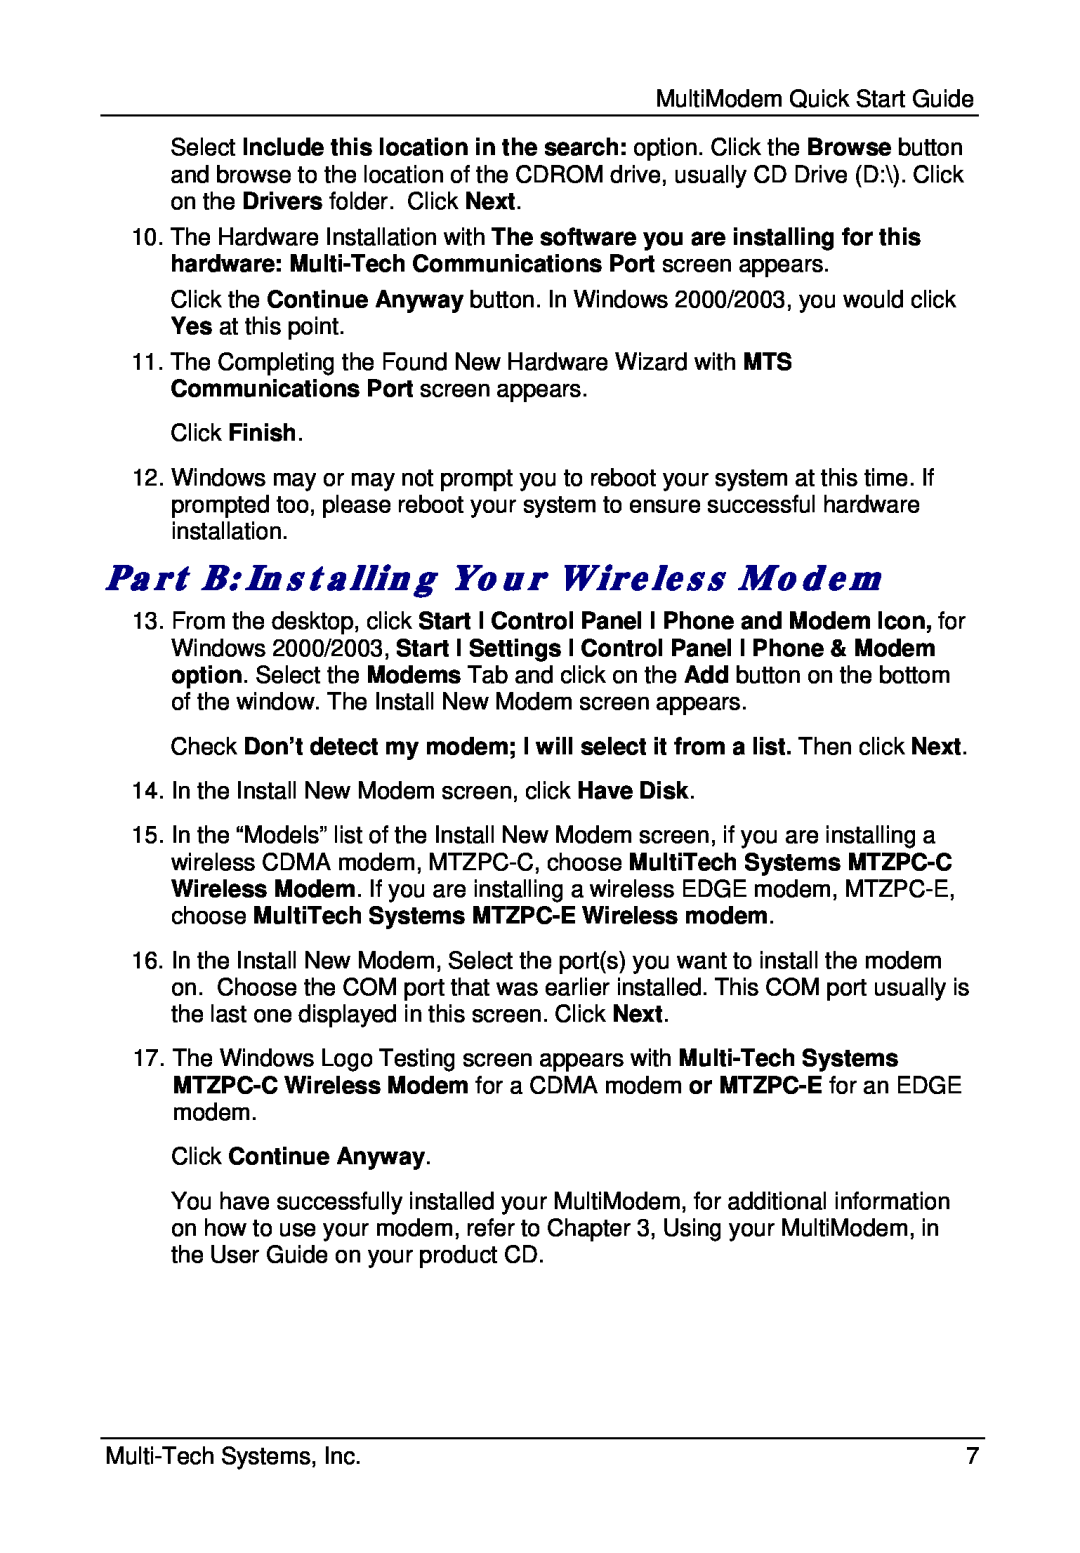 Multi-Tech Systems MTZPC-C quick start Part B Installing Your Wireless Modem 